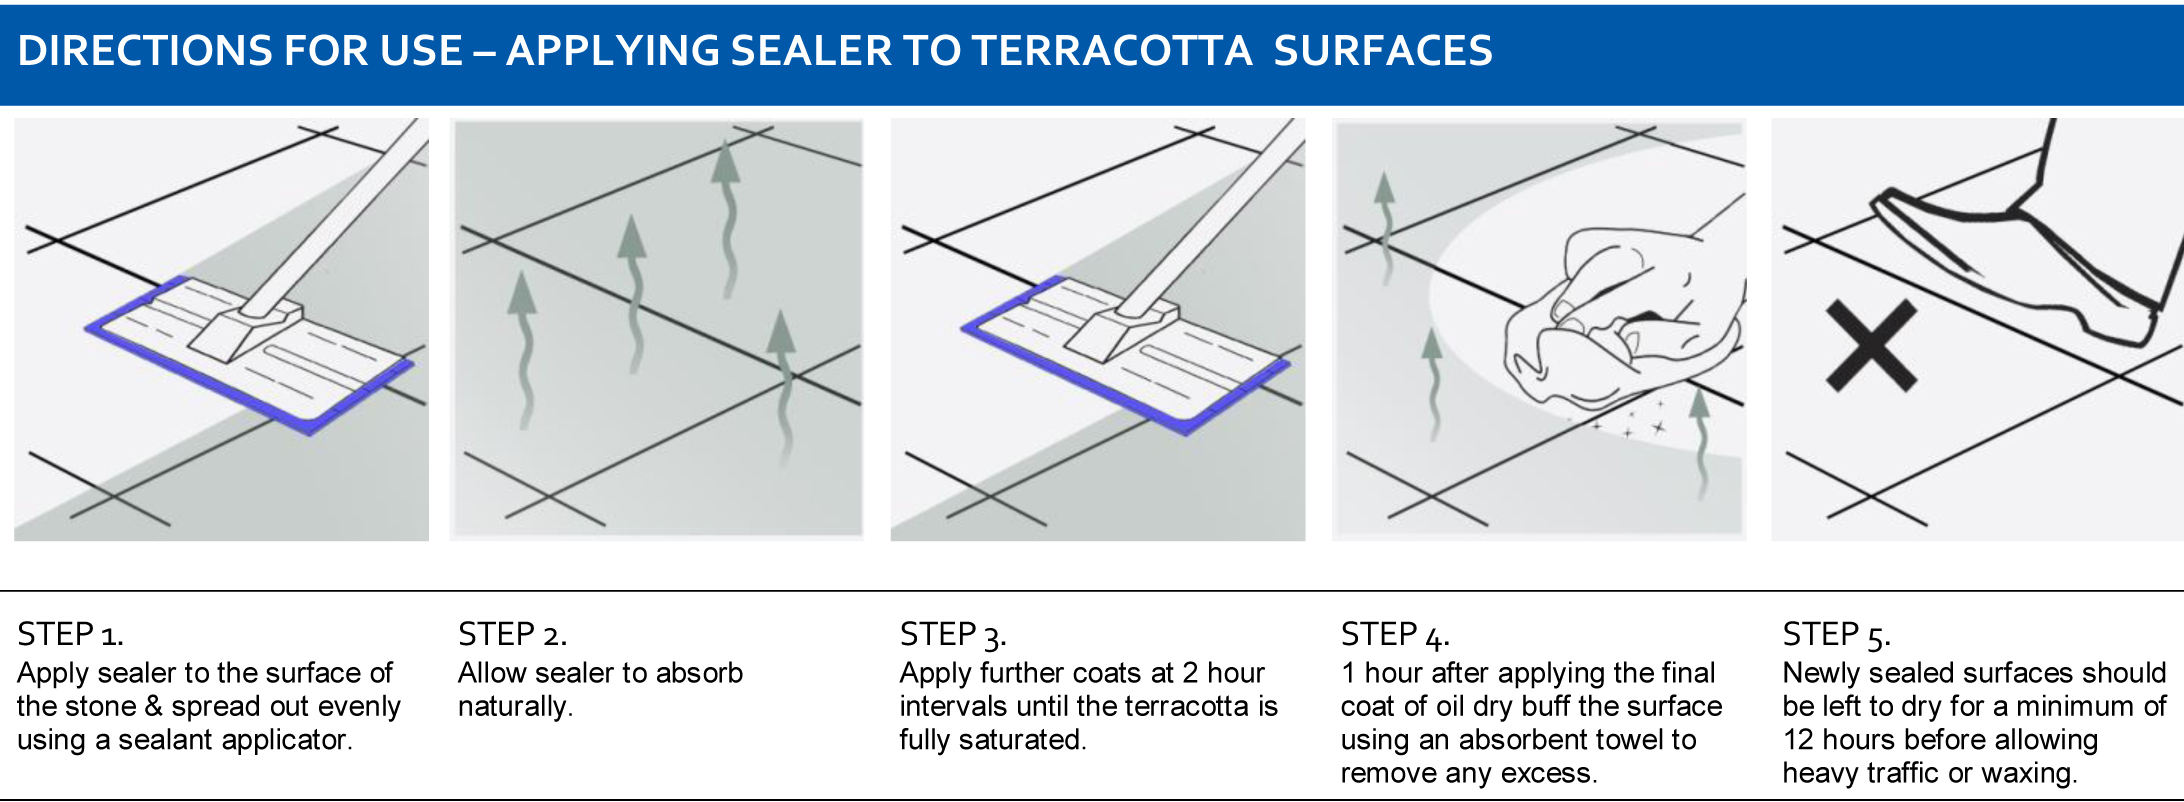 Applying_sealer_terracotta_surfaces